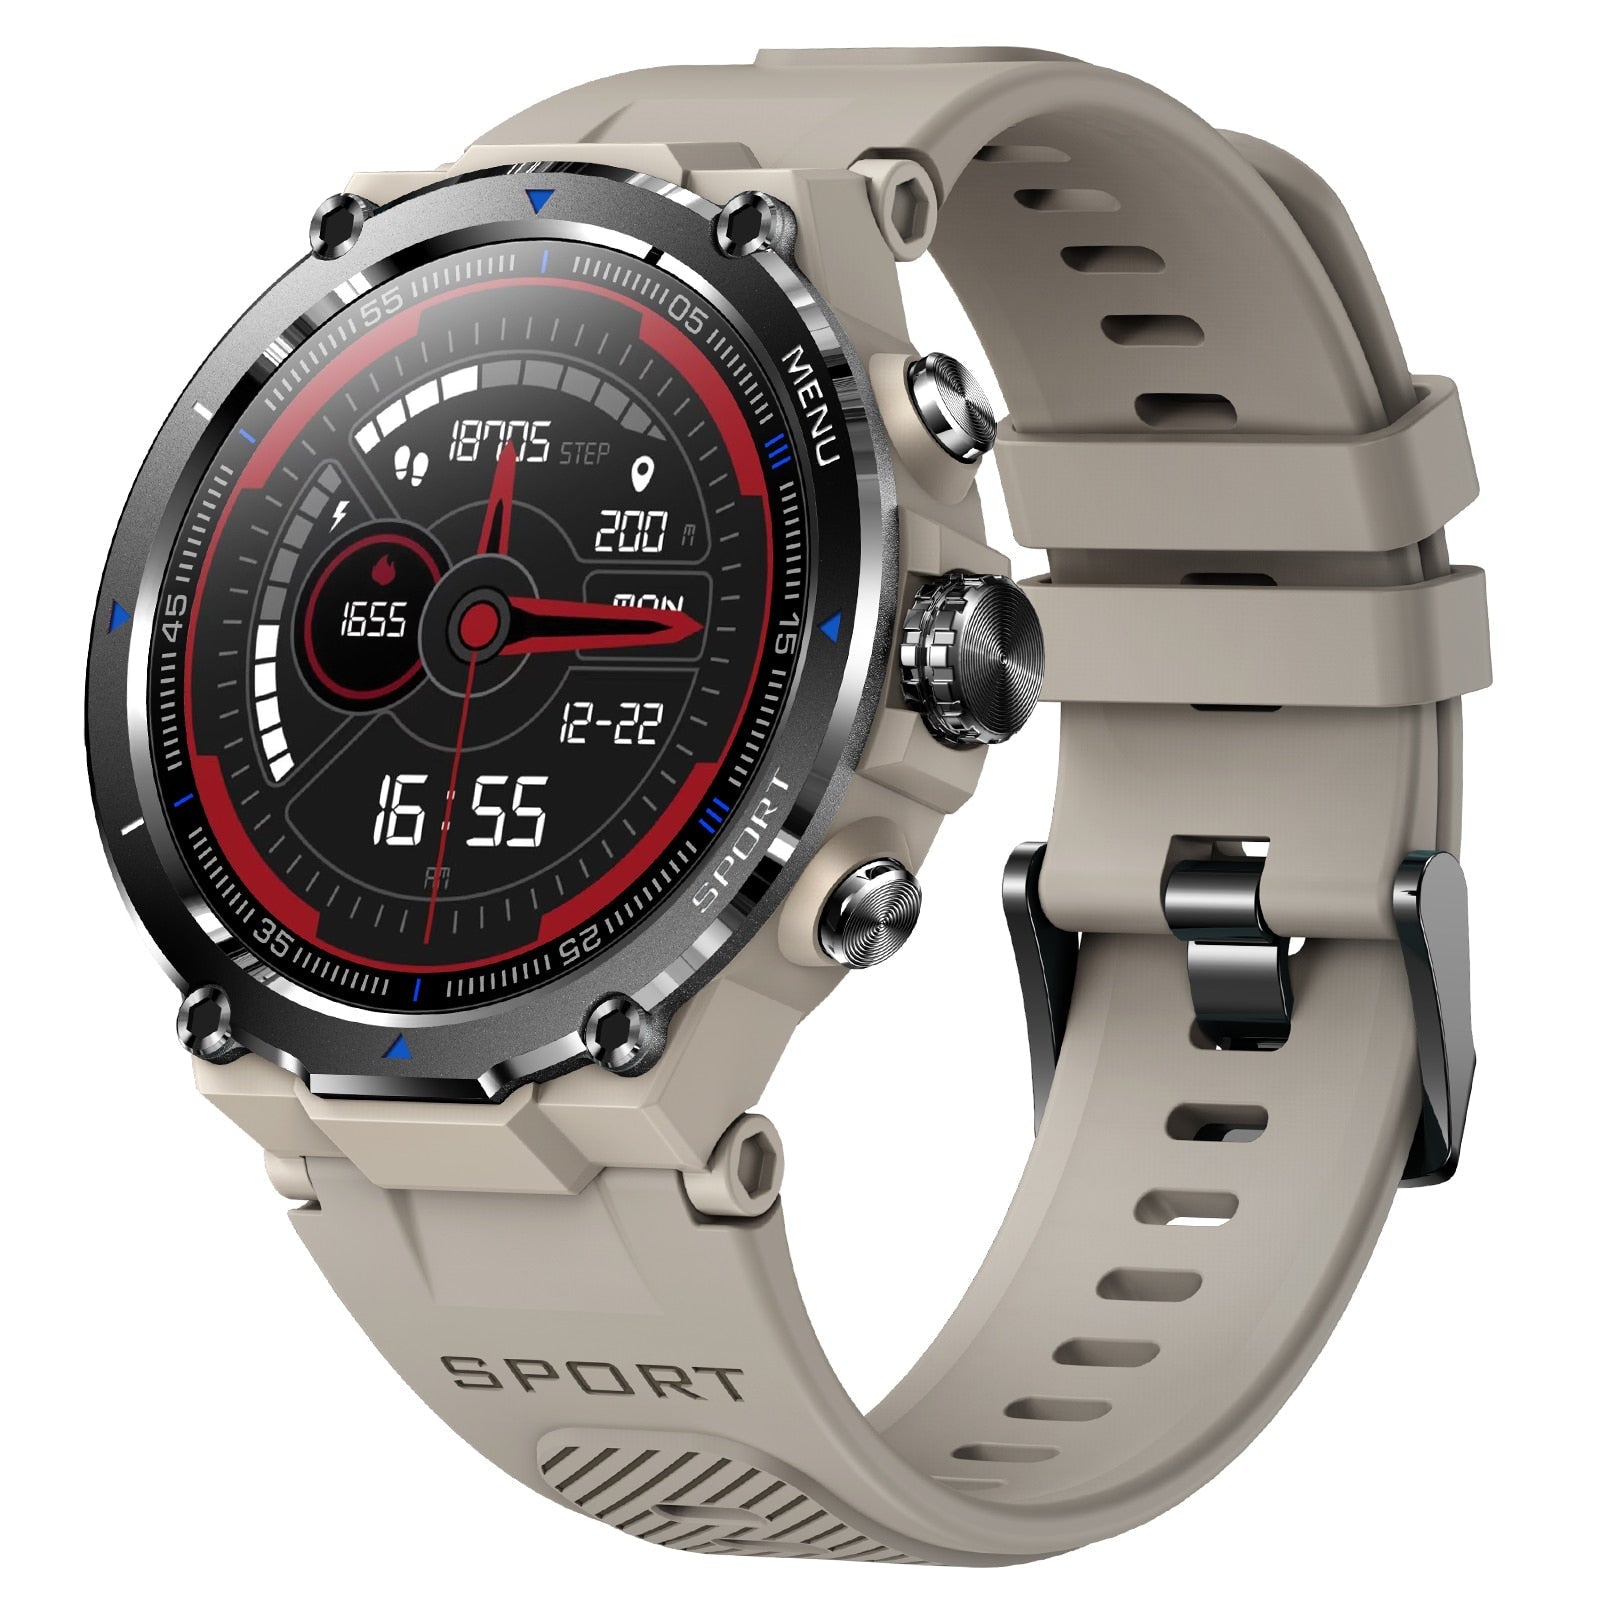 EIGIIS Smart Watch Fitness Tracker Watch con monitor Ecuador